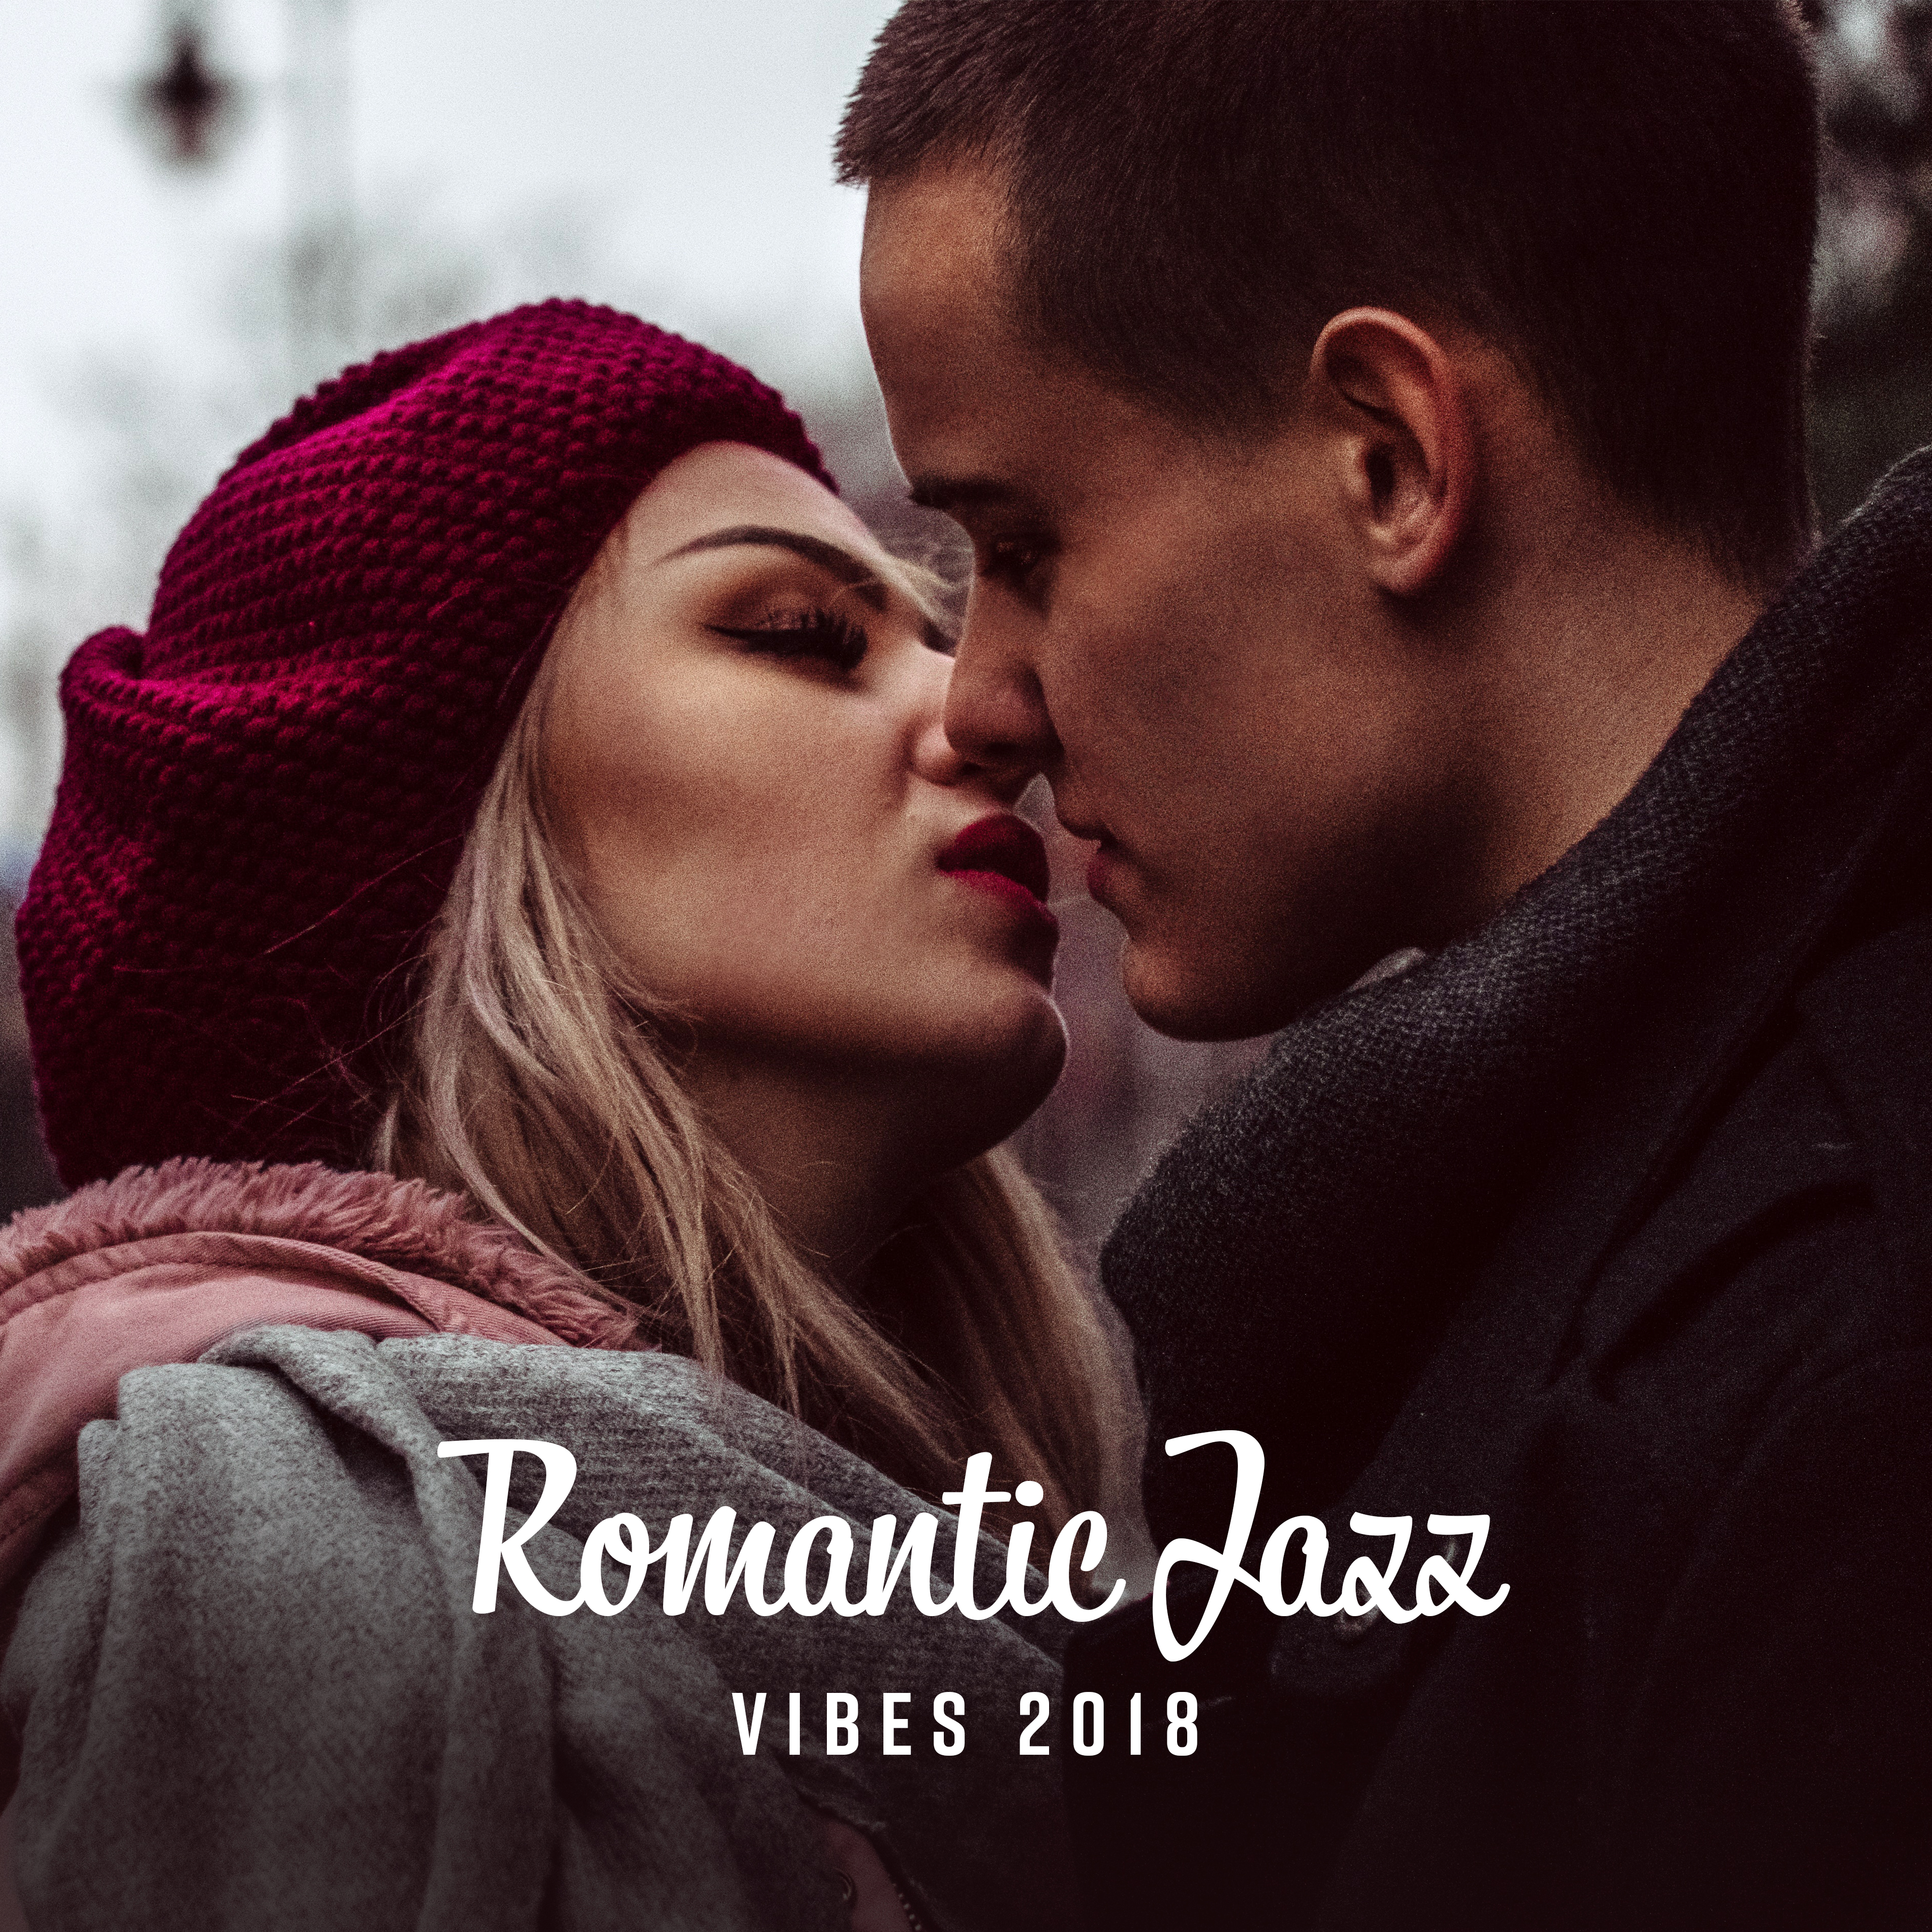 Romantic Jazz Vibes 2018